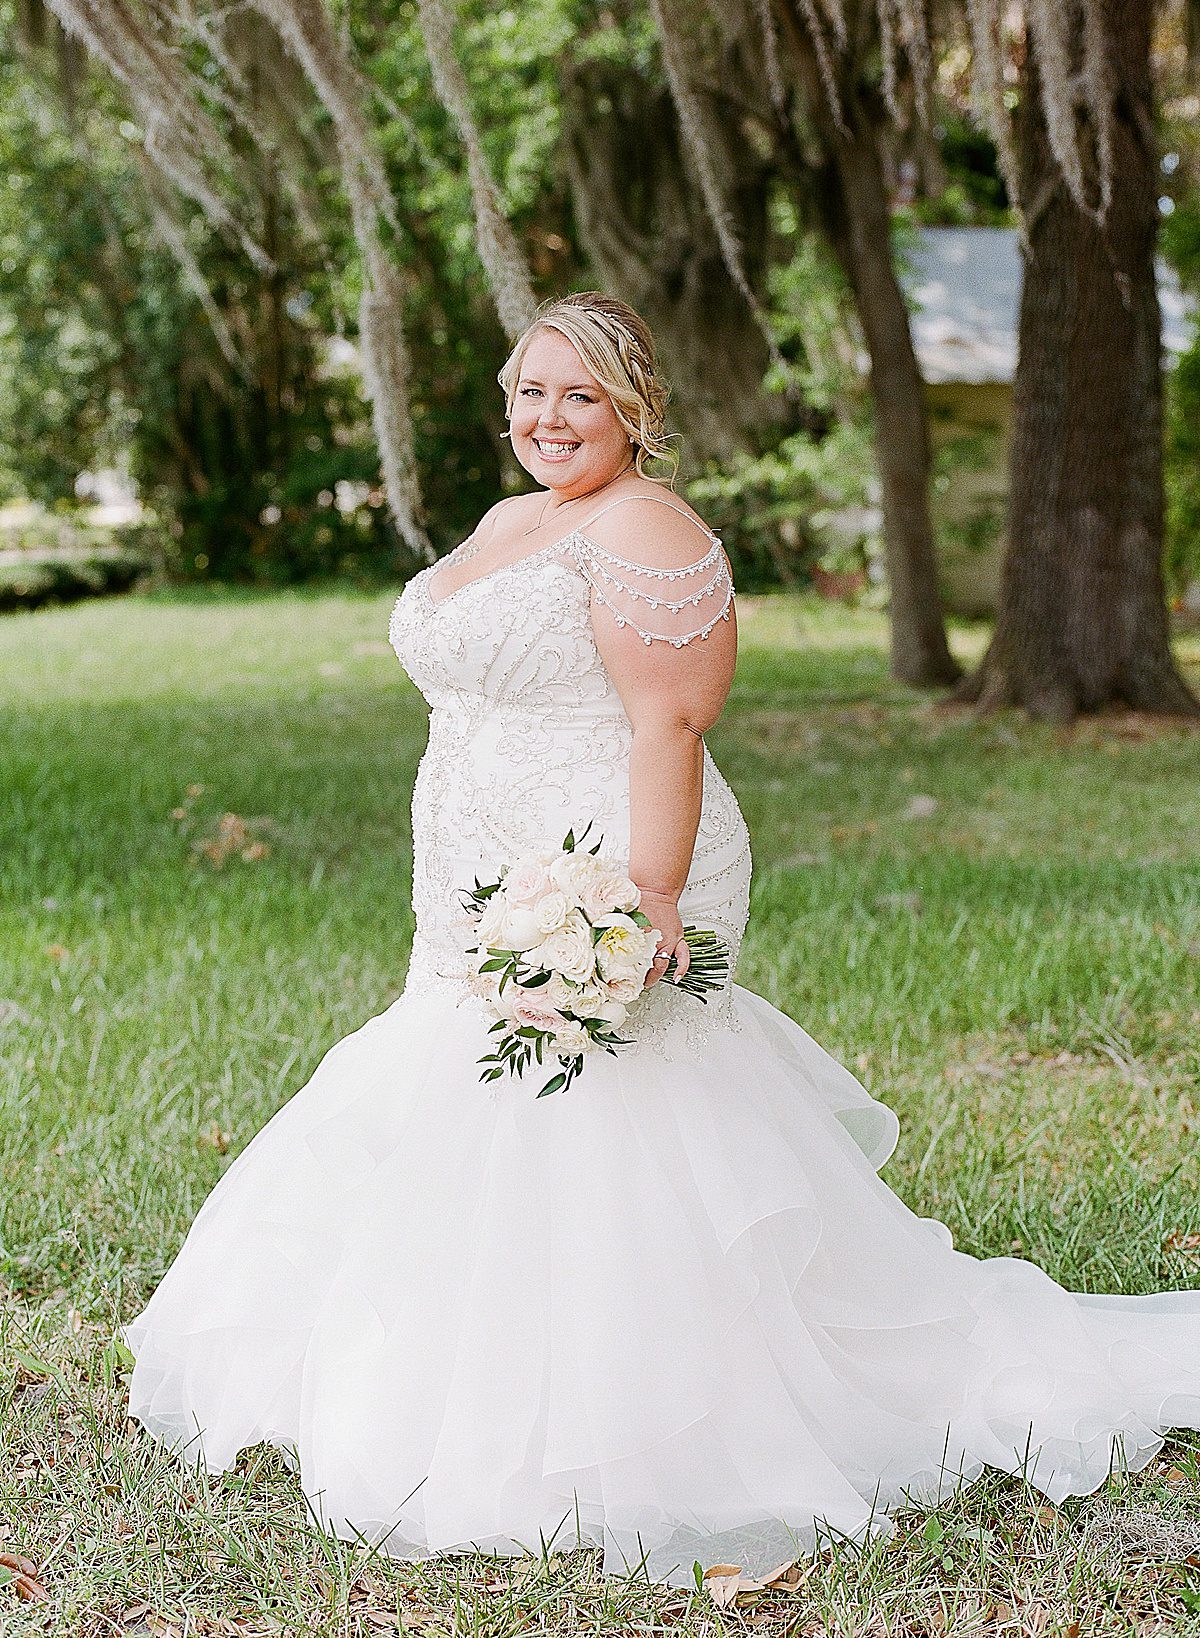 Gorgeous Bride Wedding Dress Styles in Maggie Sottero Designs Gown Photo